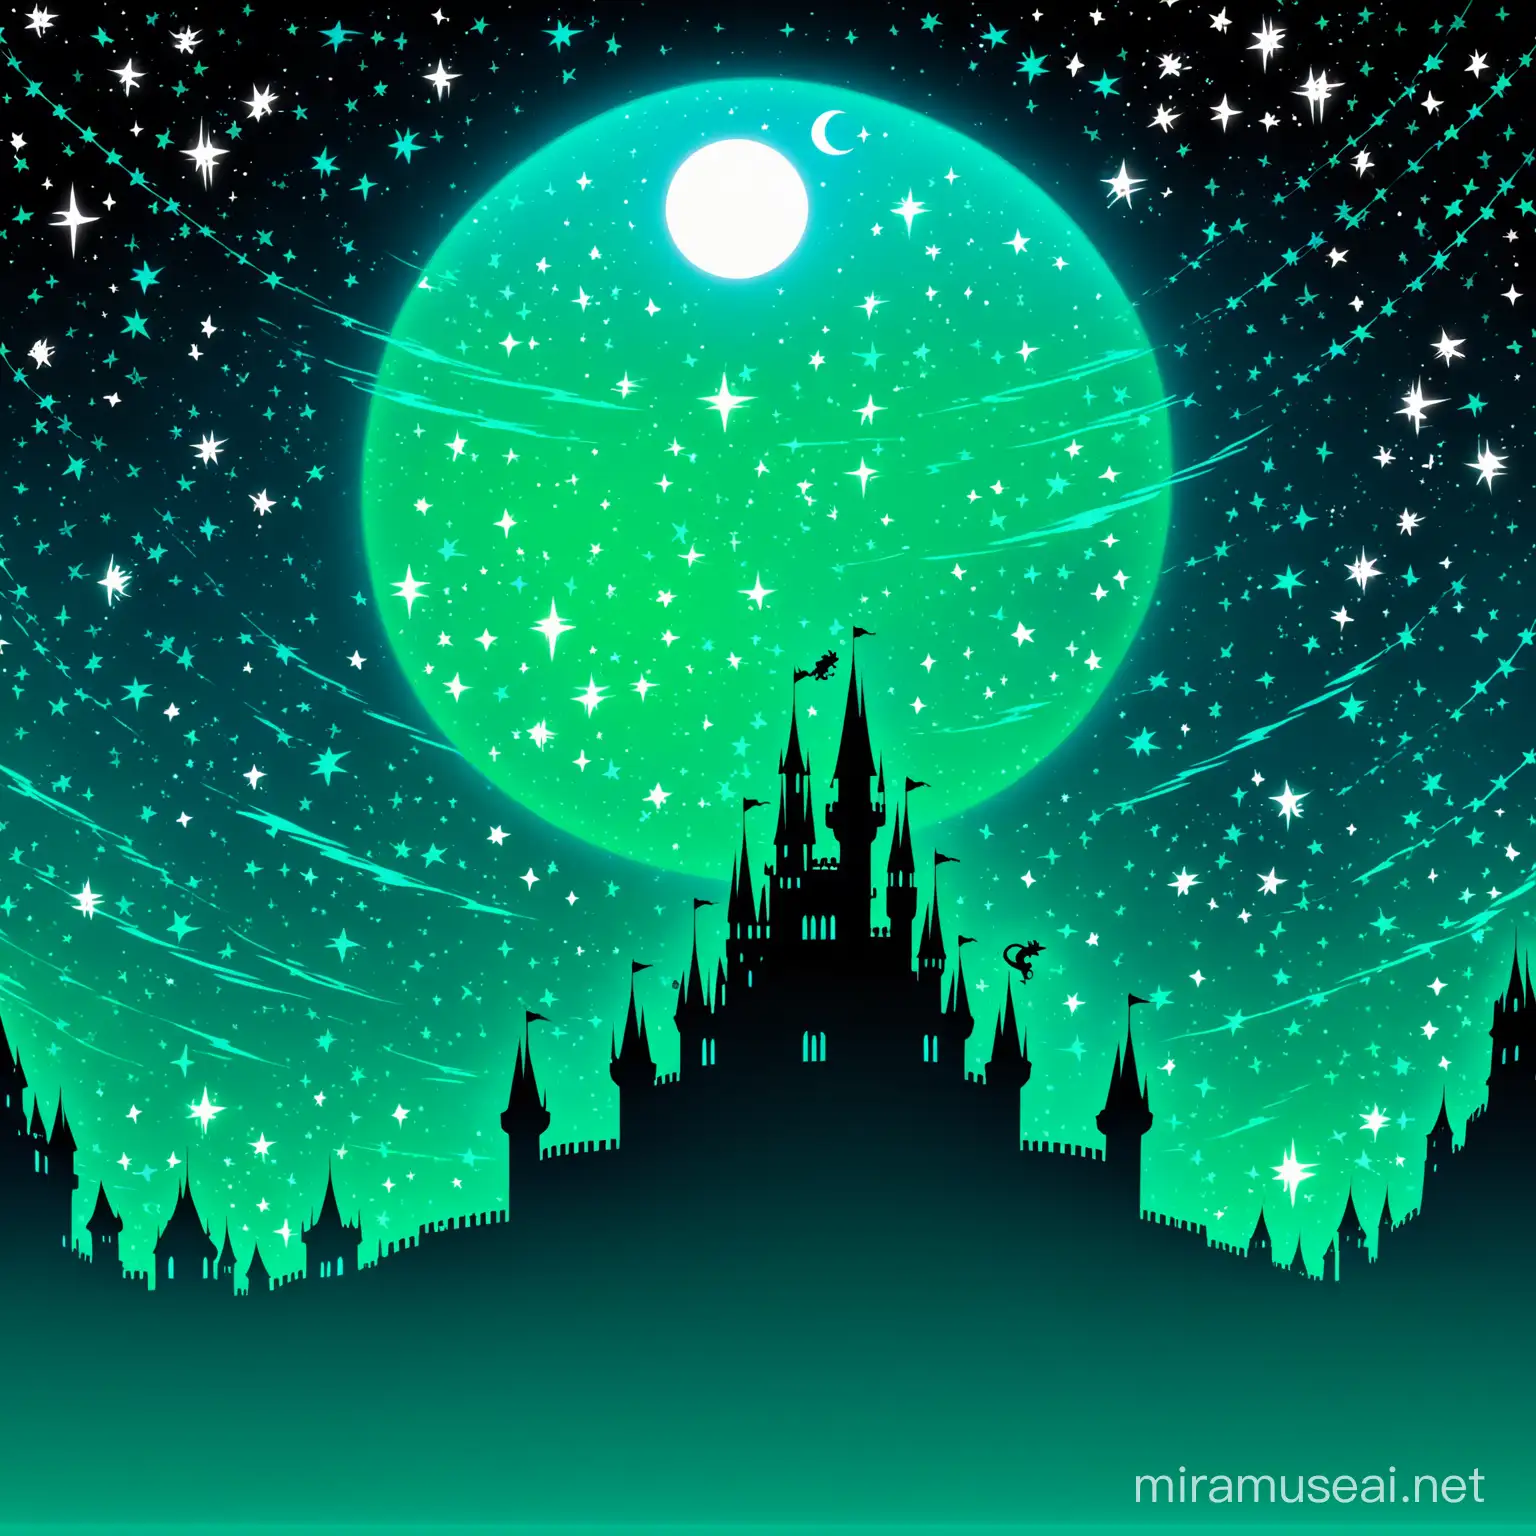 Sillouette of a lizard-castle
appreance-noir green-blue-silver/ full-image/castle glyph lines/ princess falling to her doom /epic
background-moon/night/neon stars/ lizard-mortifs/etc